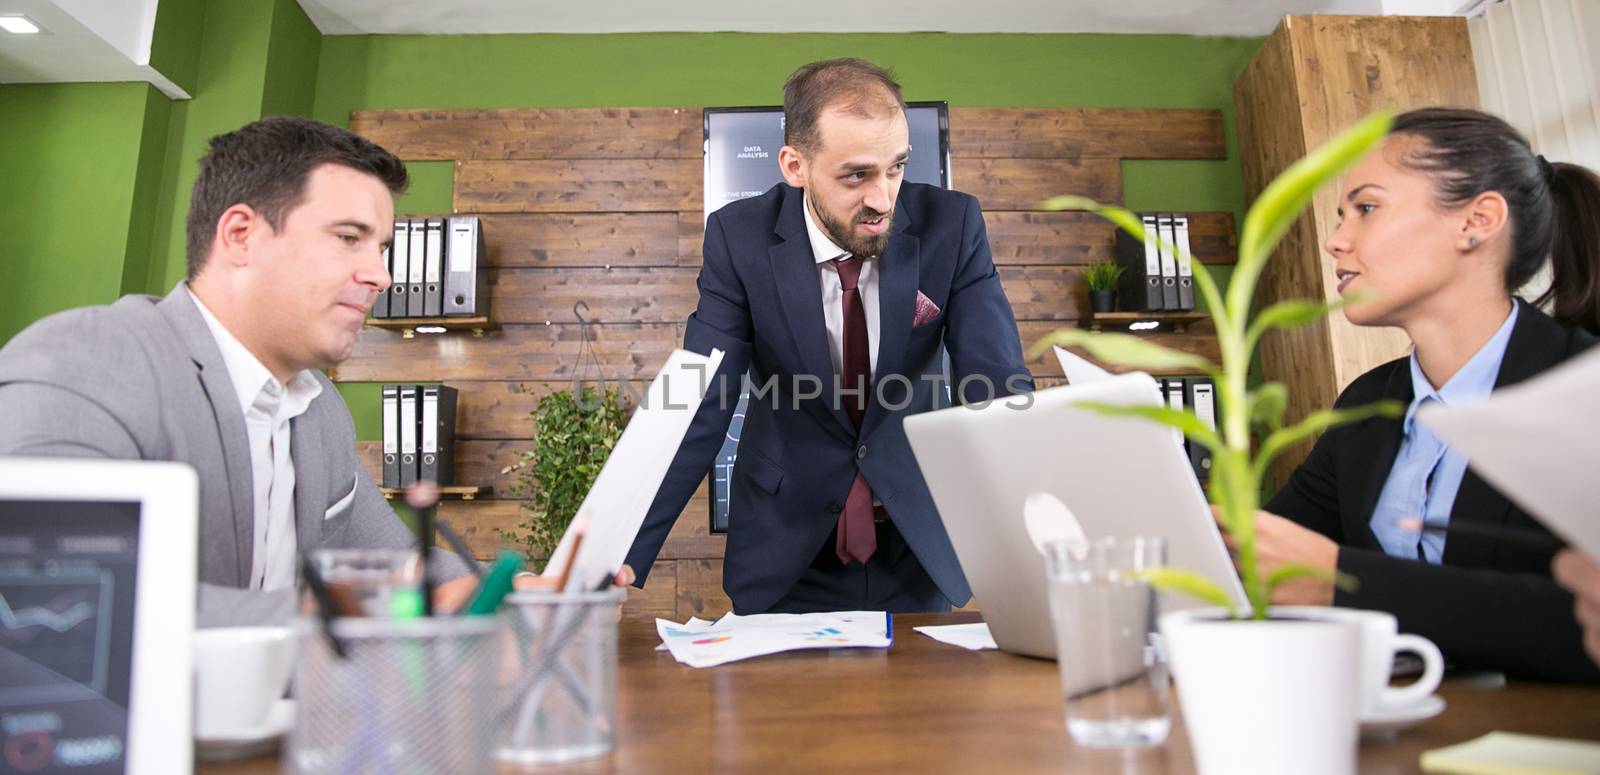 Caucasian businessman in suit discussing with his team by DCStudio